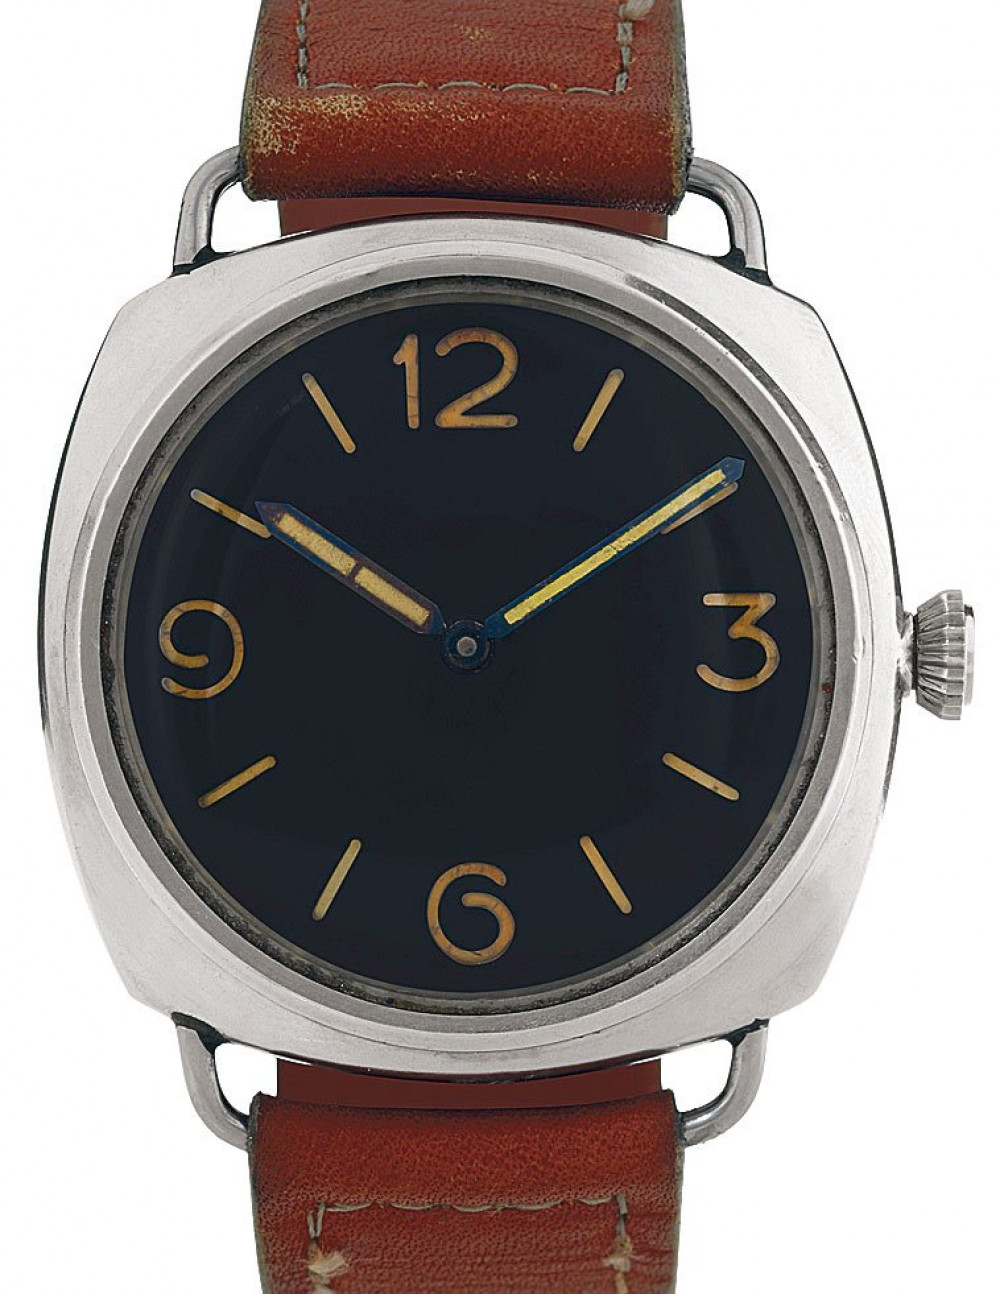 Zegarek firmy Panerai, model Handaufzugsuhr von 1943